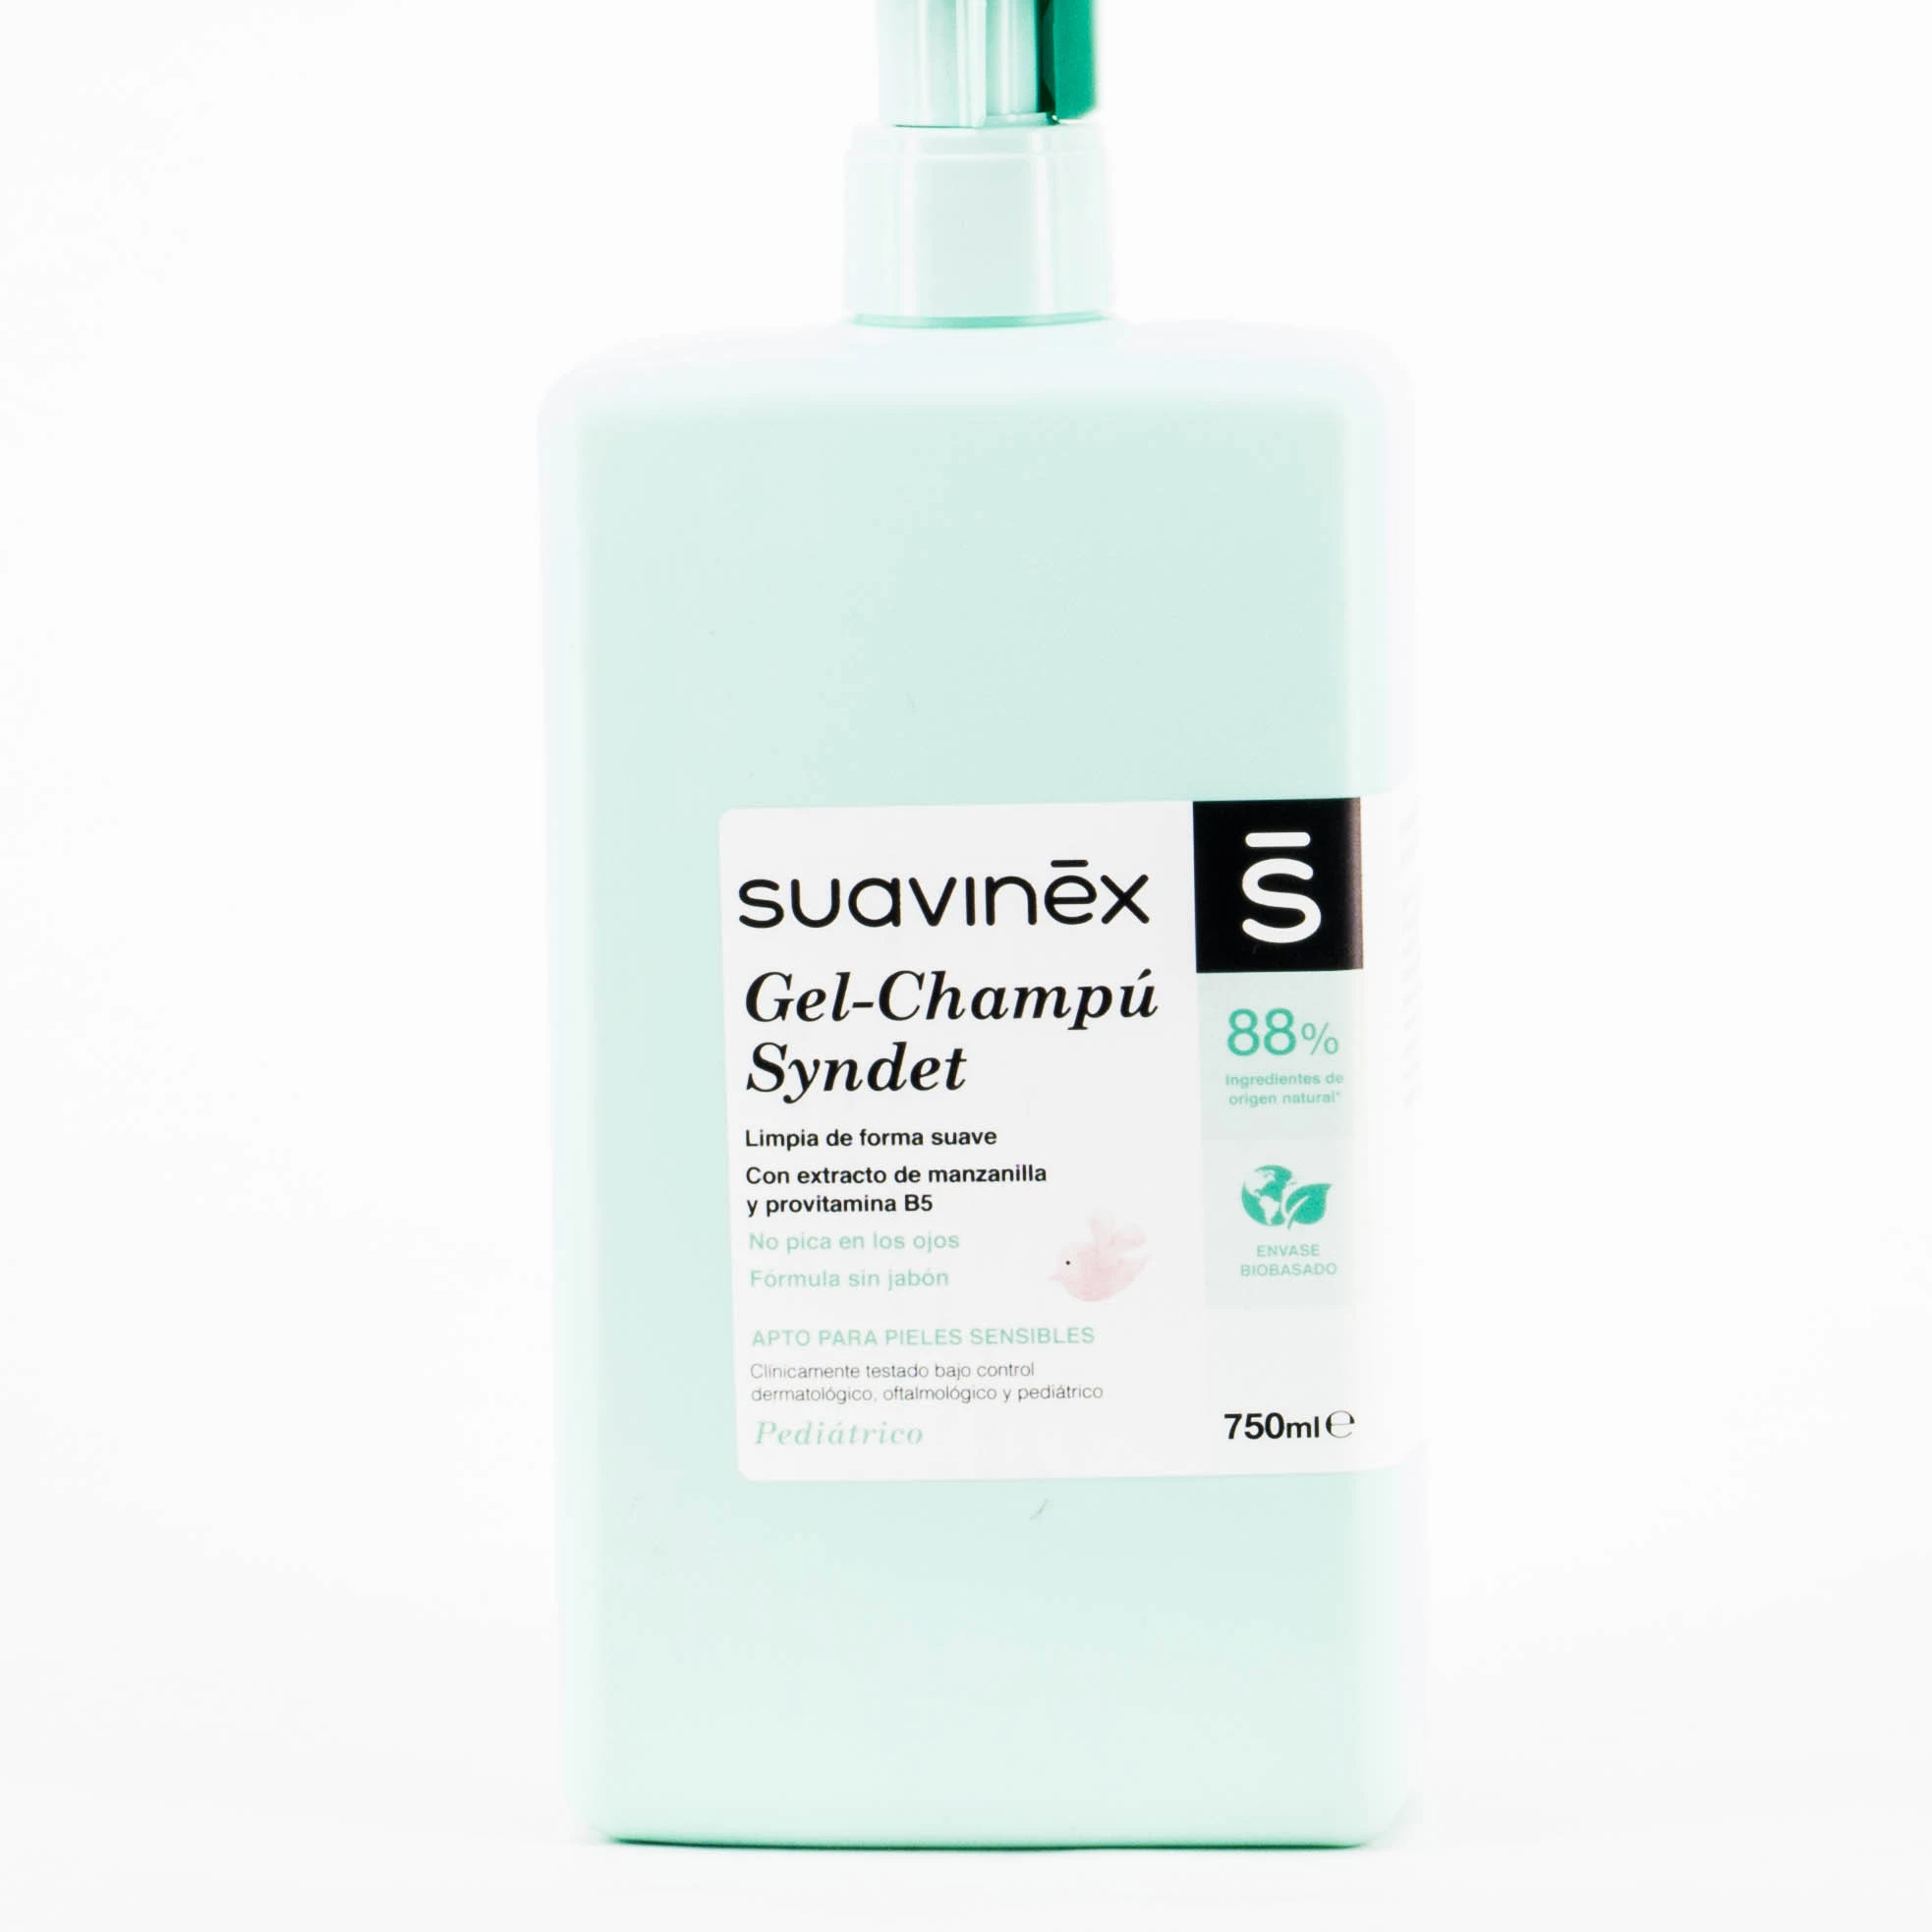 Suavinex Gel Champú Syndet, 750 ml - ¡Mejor Precio!